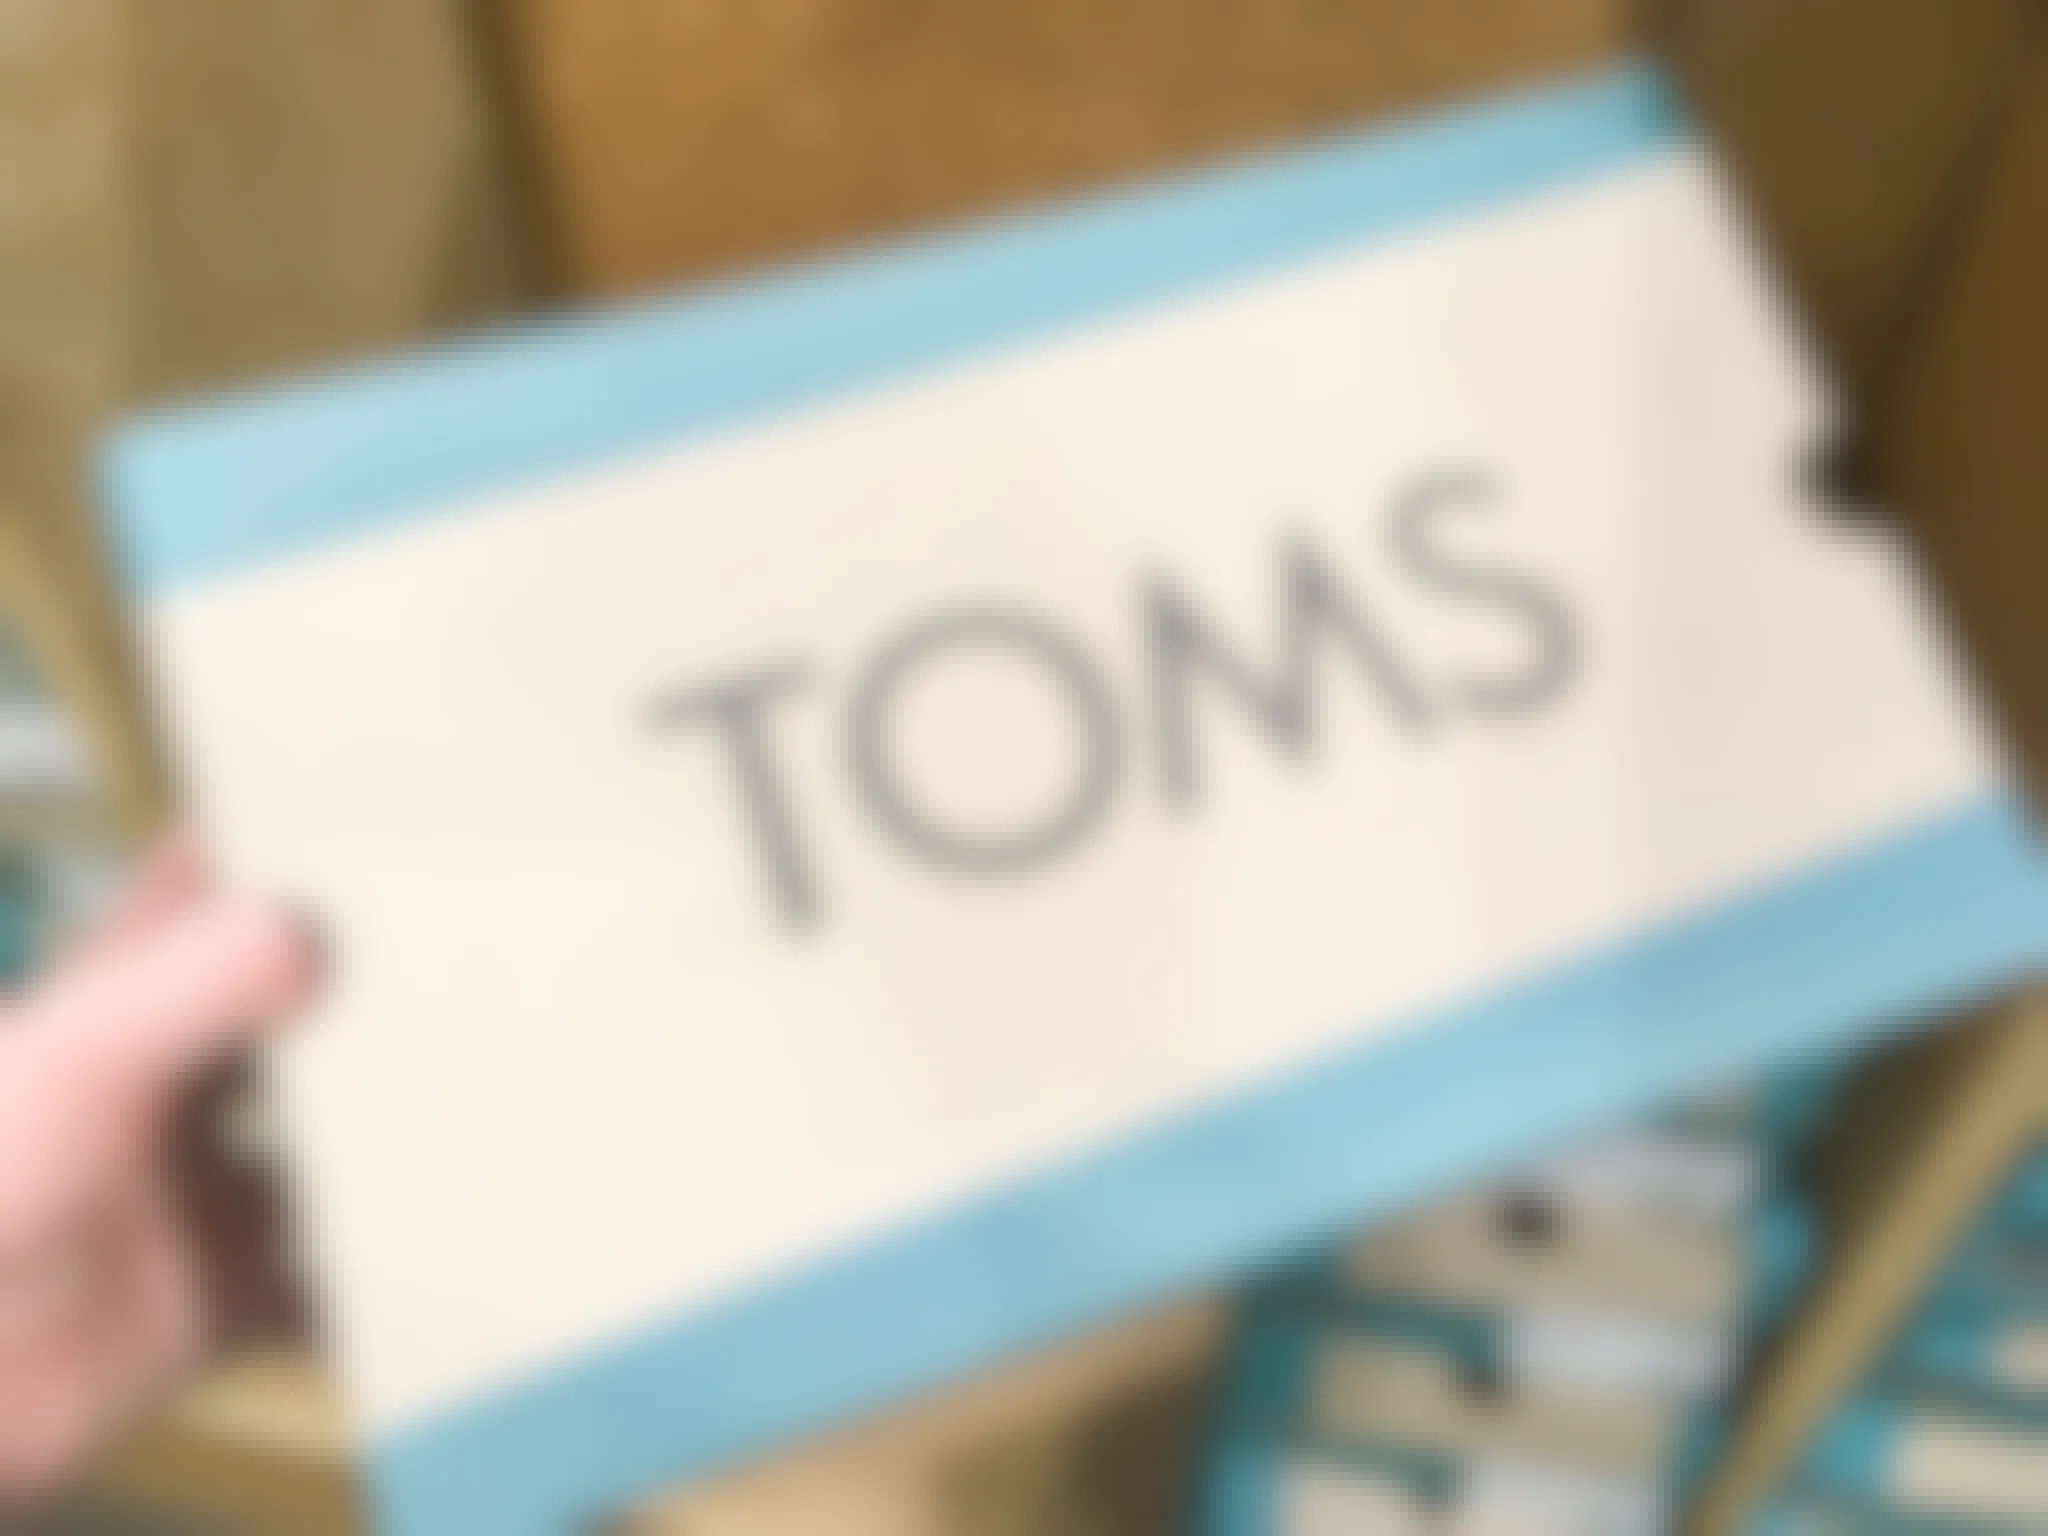 toms shoe box